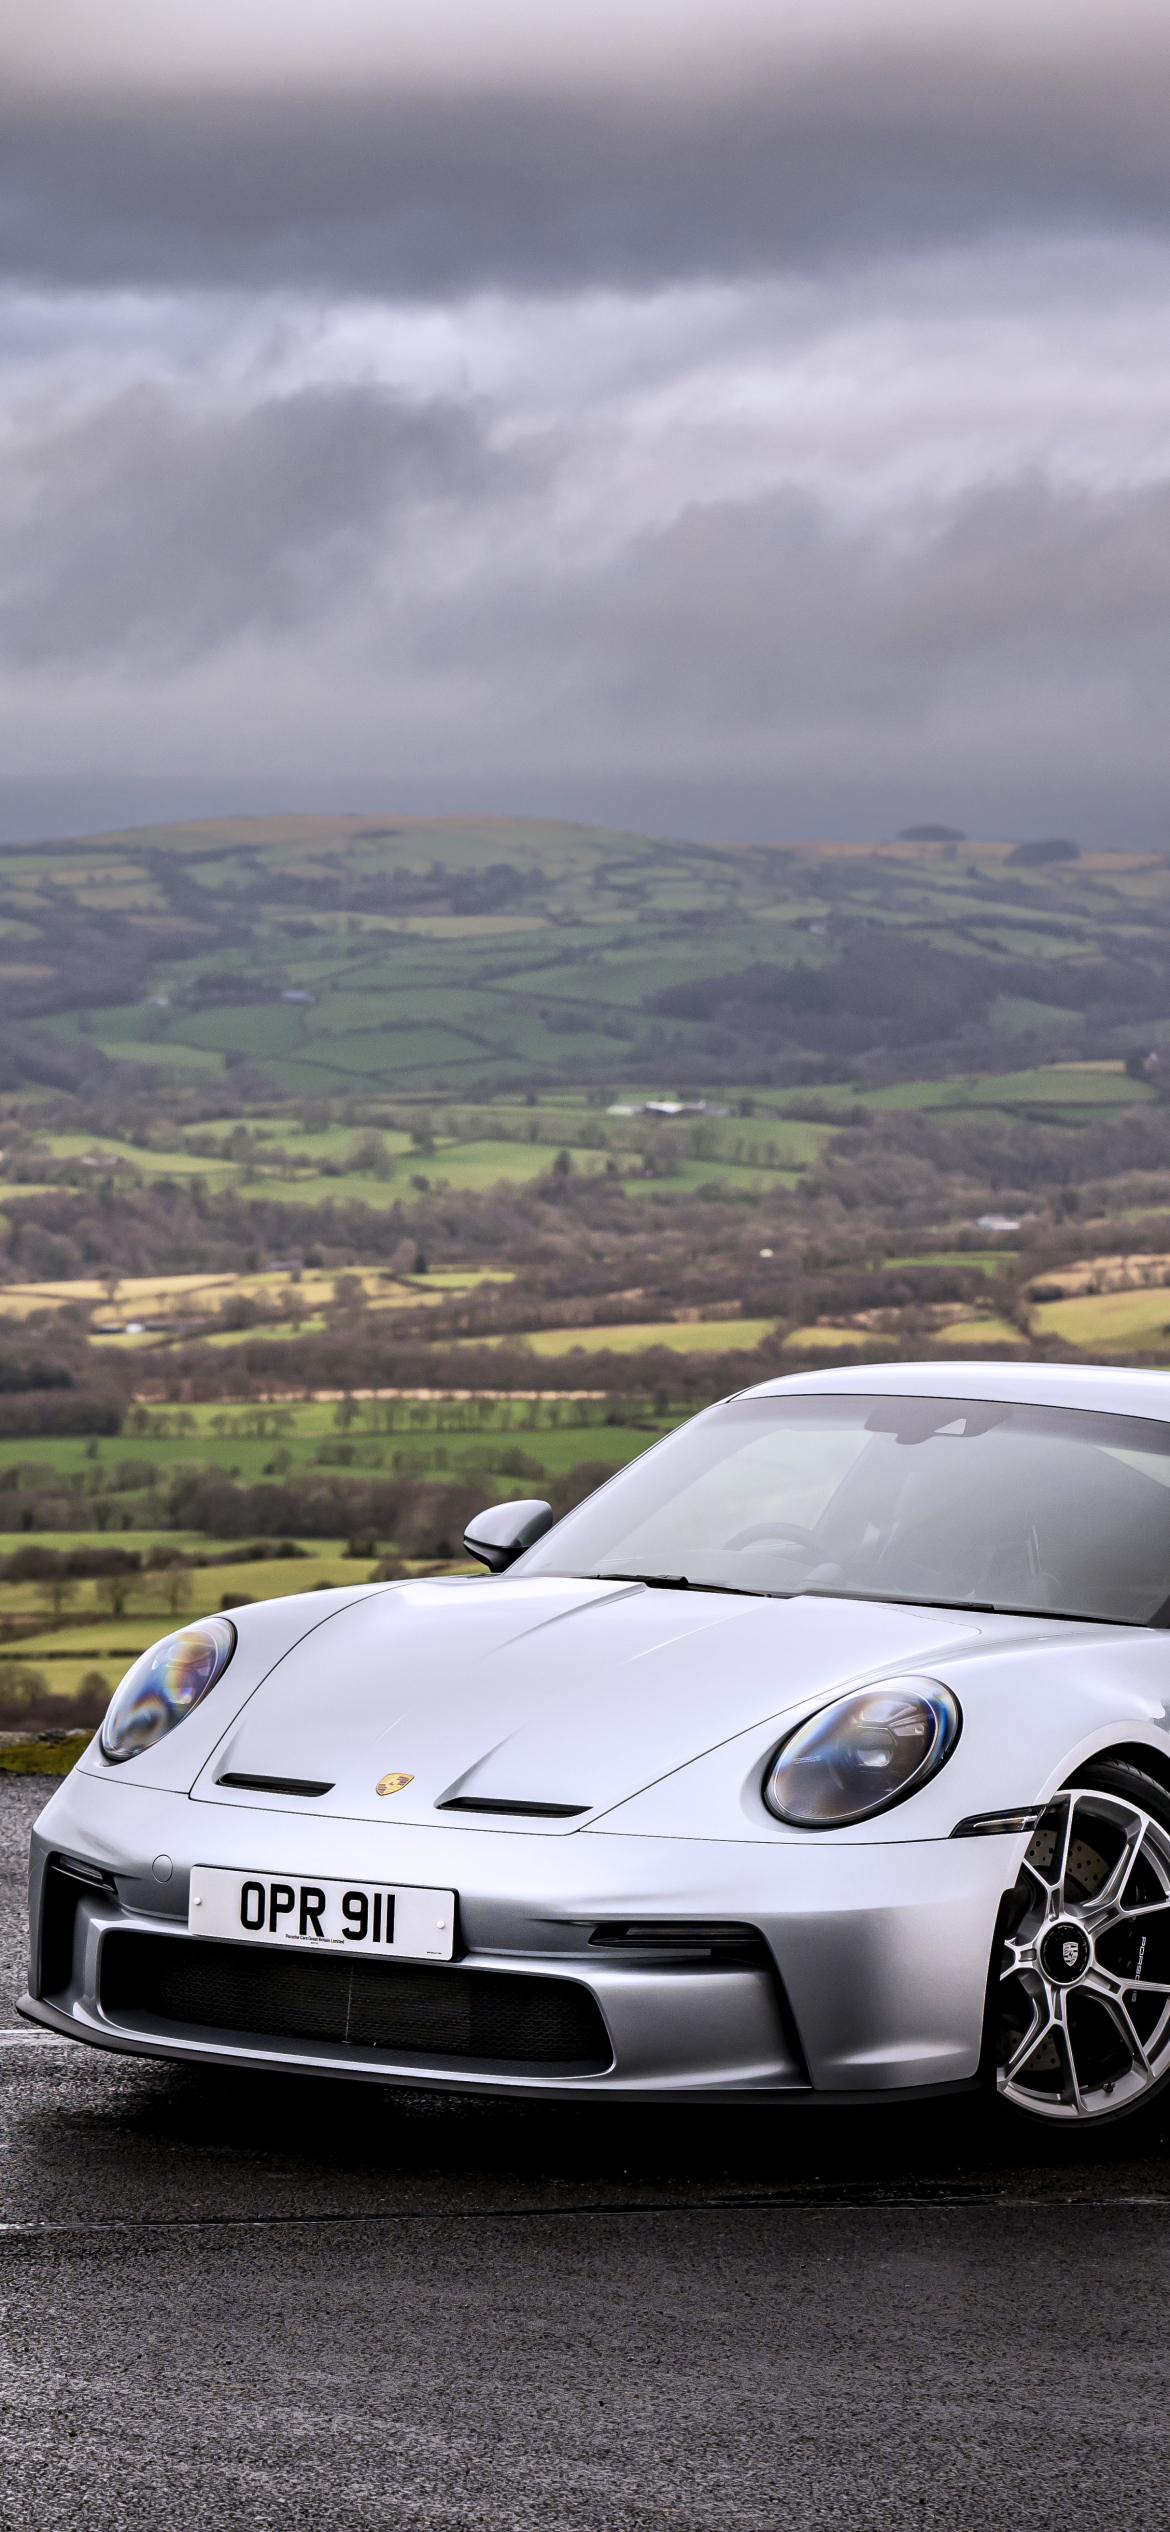 Porsche 911 GT3 Wallpapers  Top 25 Best Porsche 911 GT3 Backgrounds  Download